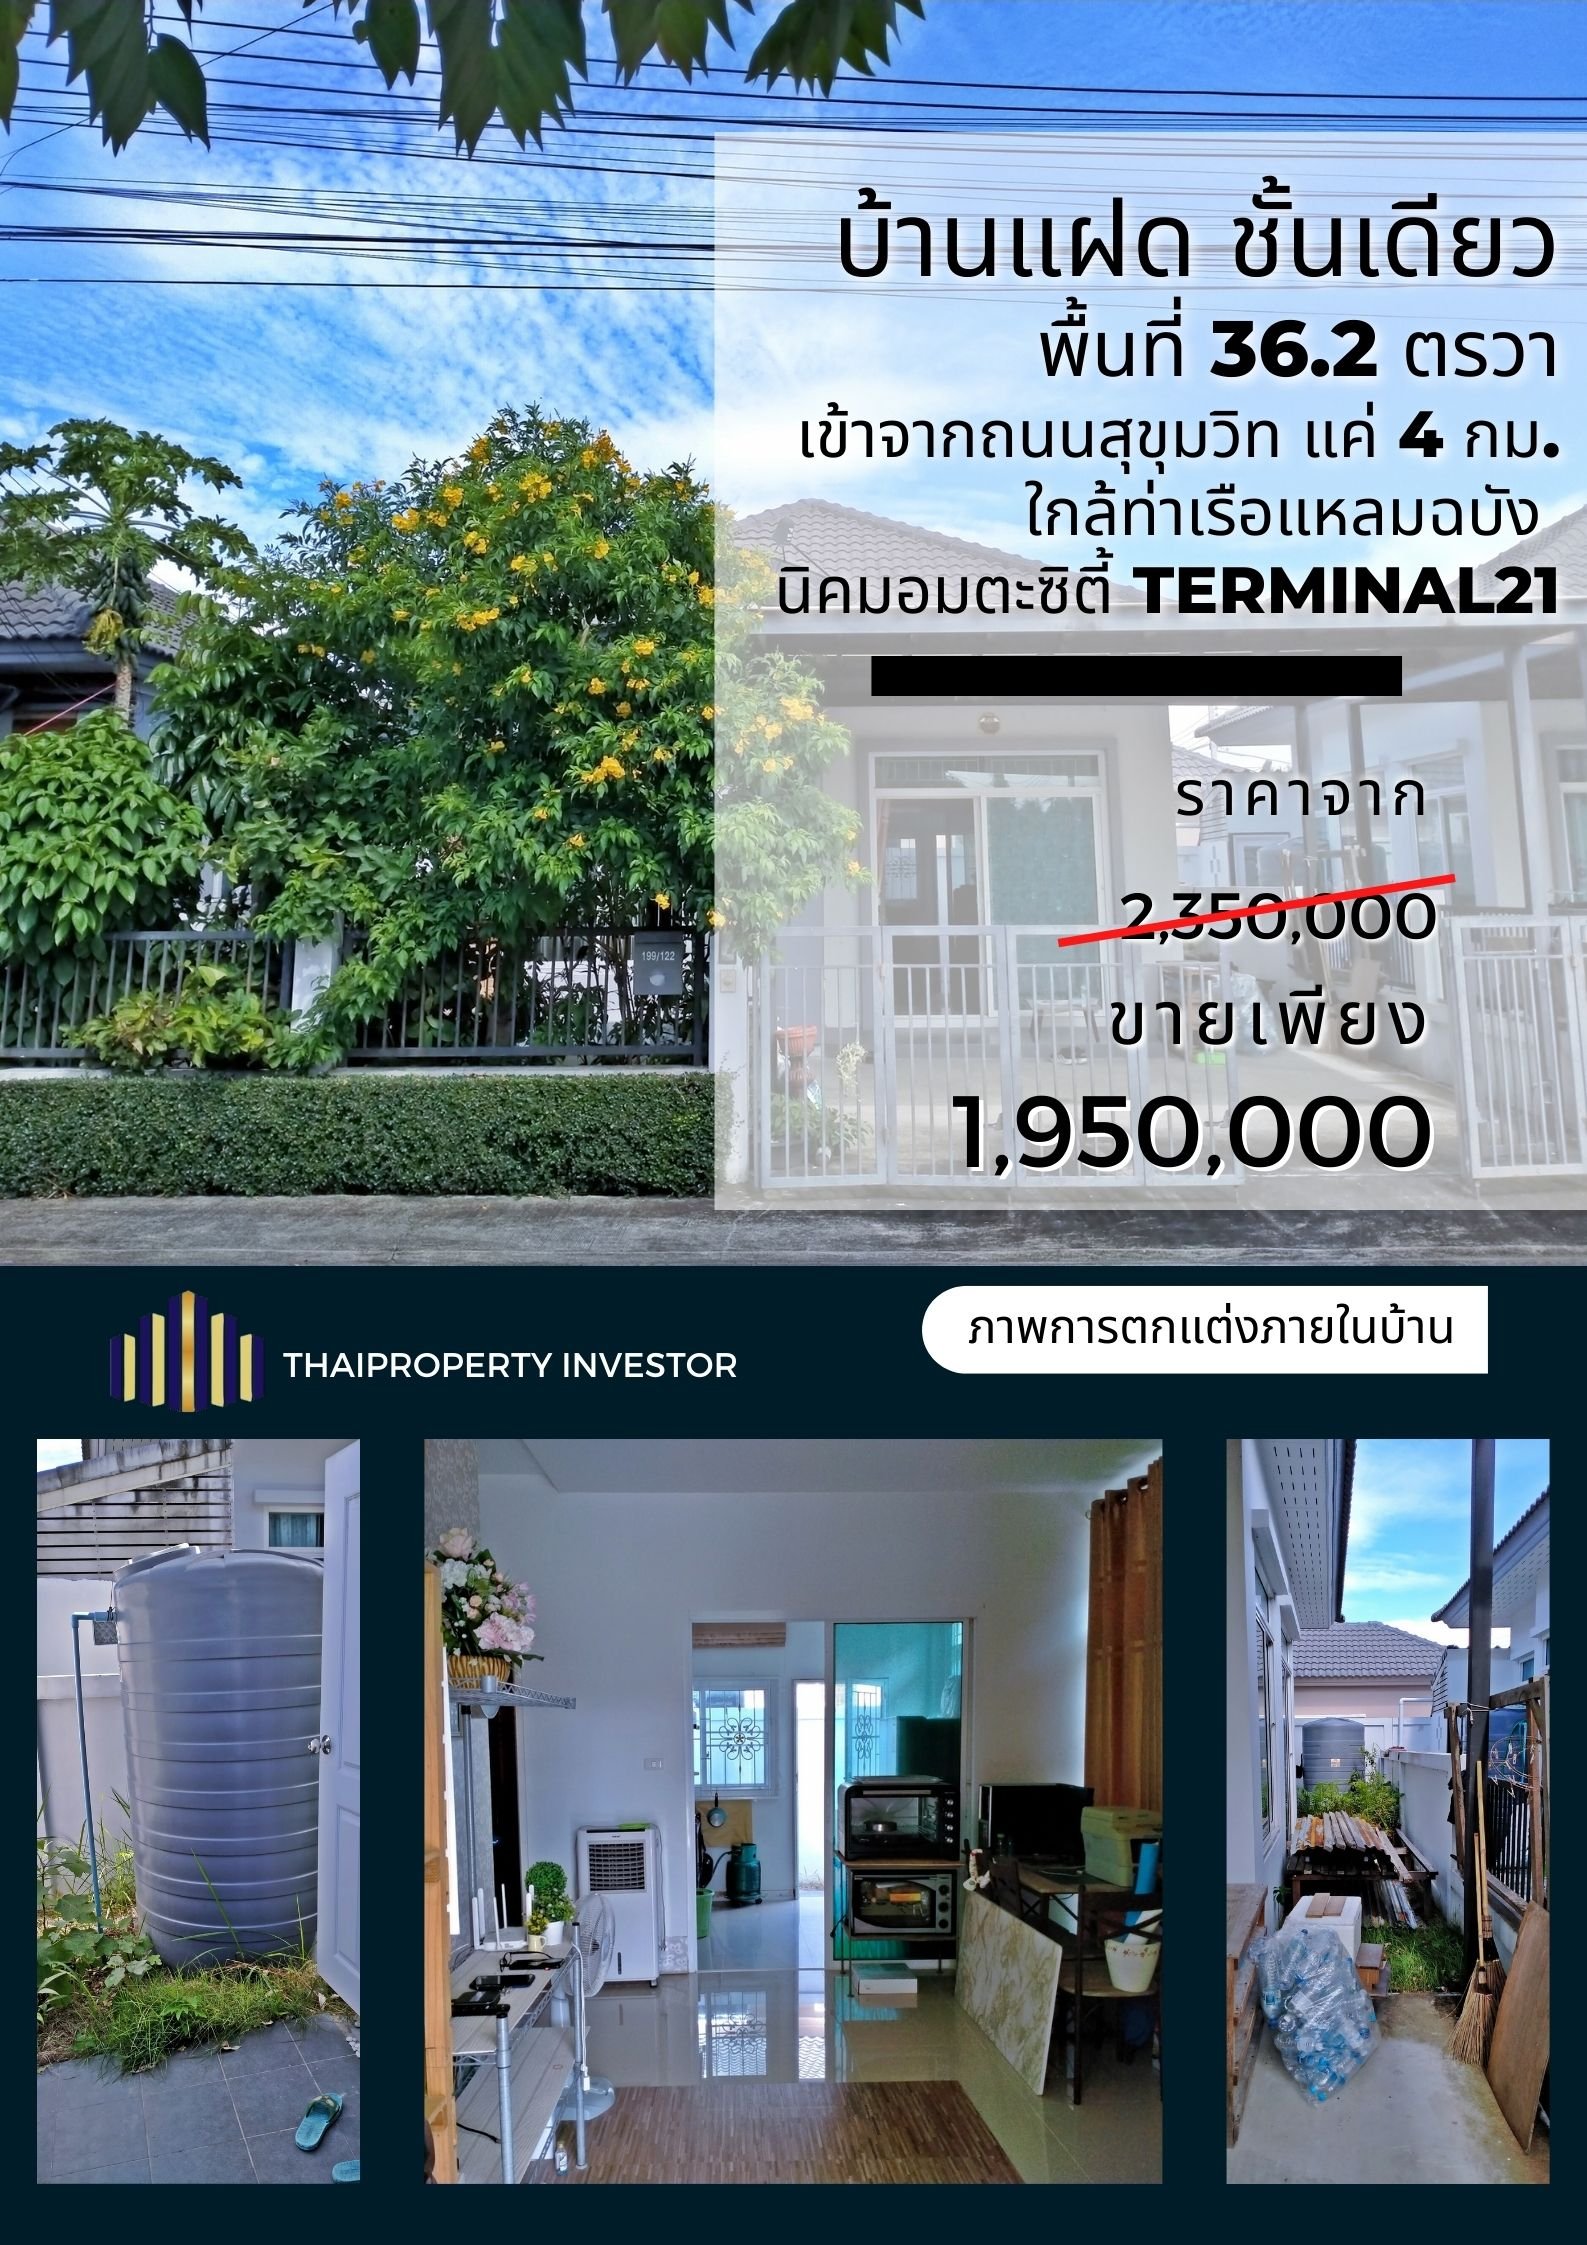 Special Price !!! Single-storey Semi-Detached House for sale Bang Lamung , 36.2 sq wa , Groovy Park Village Bang Lamung 1 near Laem Chabang Port , Amata City Industrial Estate , Terminal21 Pattaya